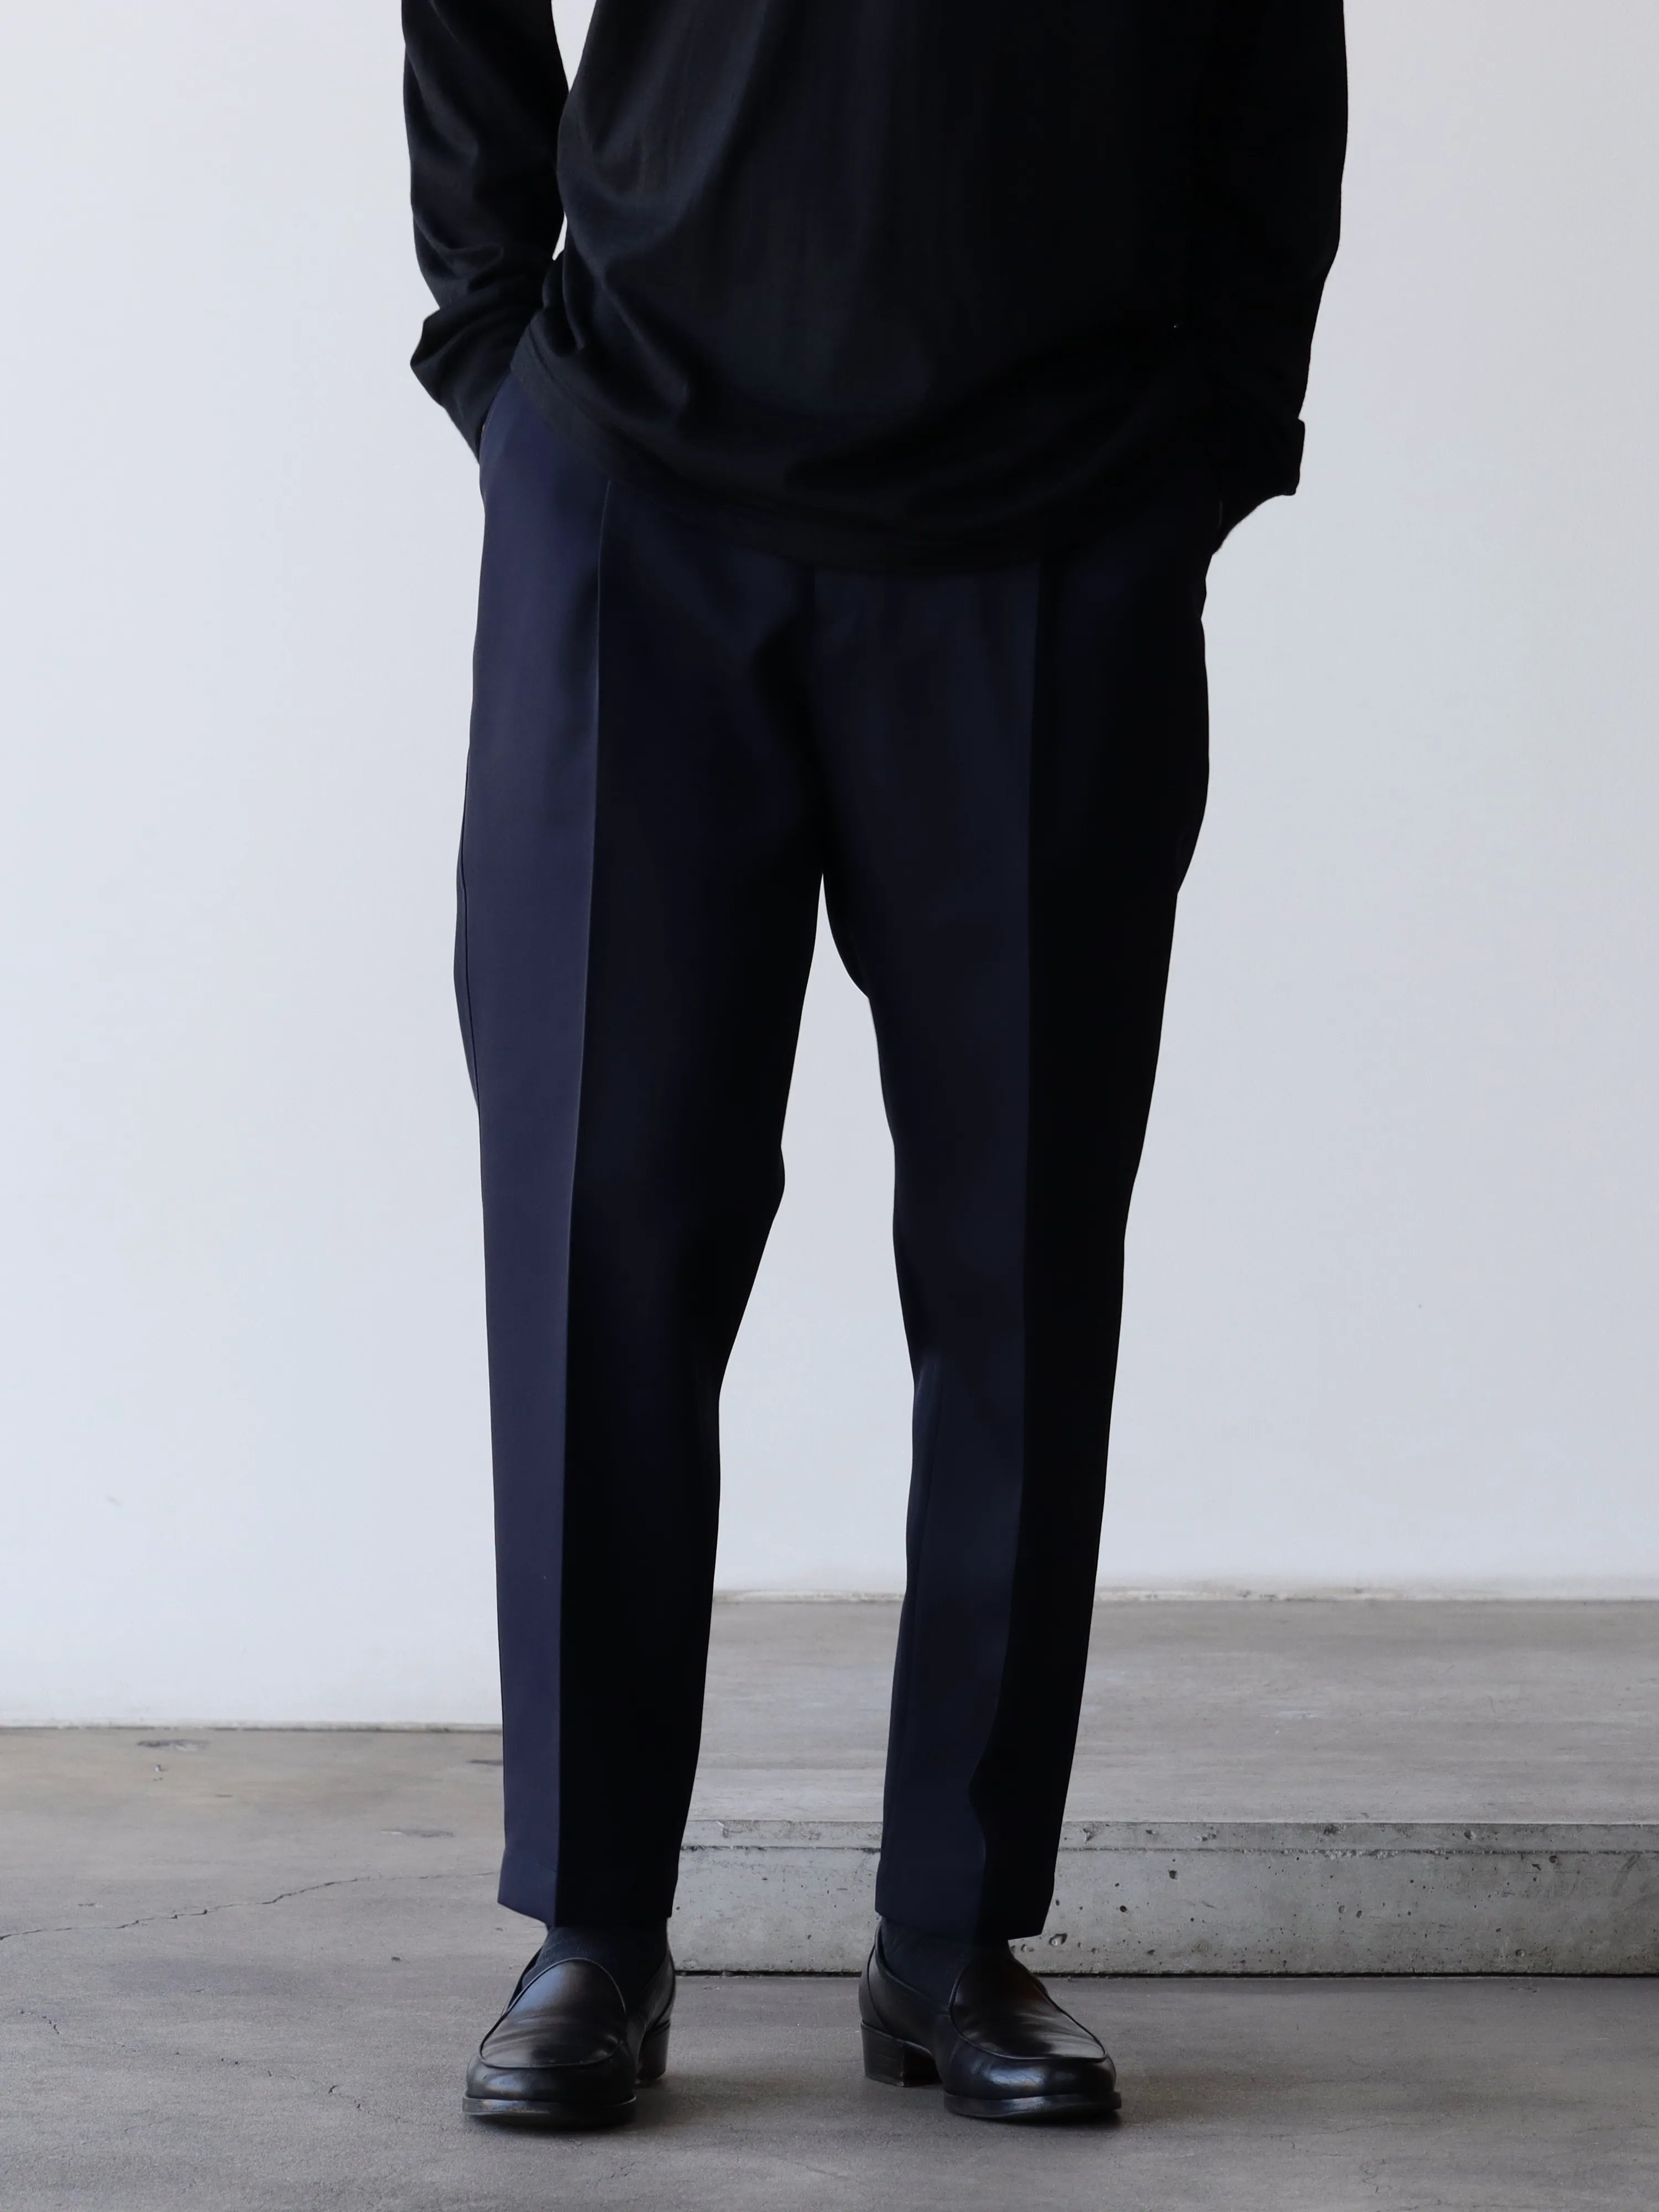 Hobbs Gael Wool Blend Tapered Trousers, Black at John Lewis & Partners